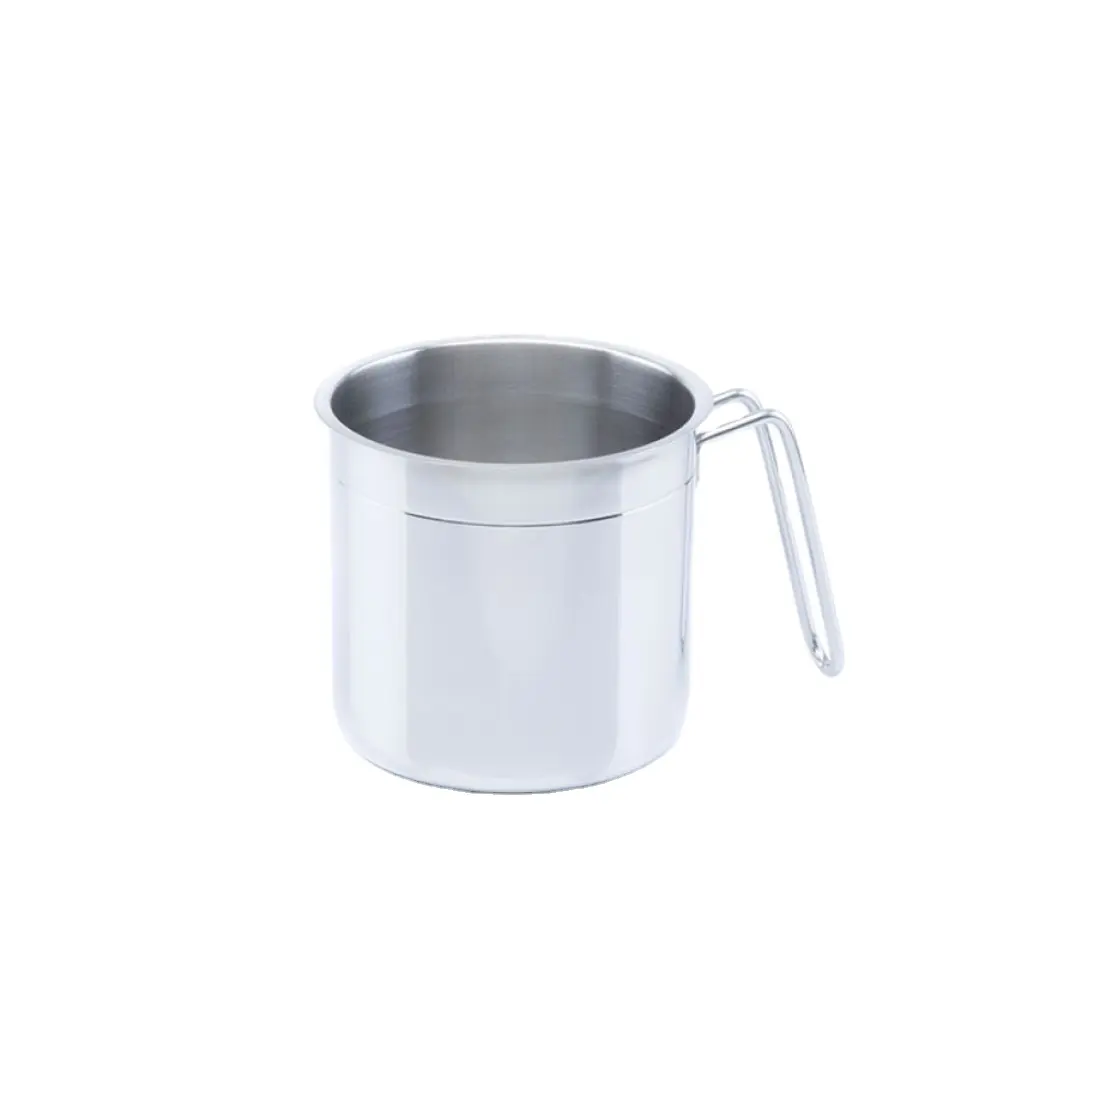 New Italian Design Cooking Sets Milk Jug Cm 12 Handle for Milk Water Tea Coffee Kitchen Tools Accessories Cooking 2023 Eco Metal